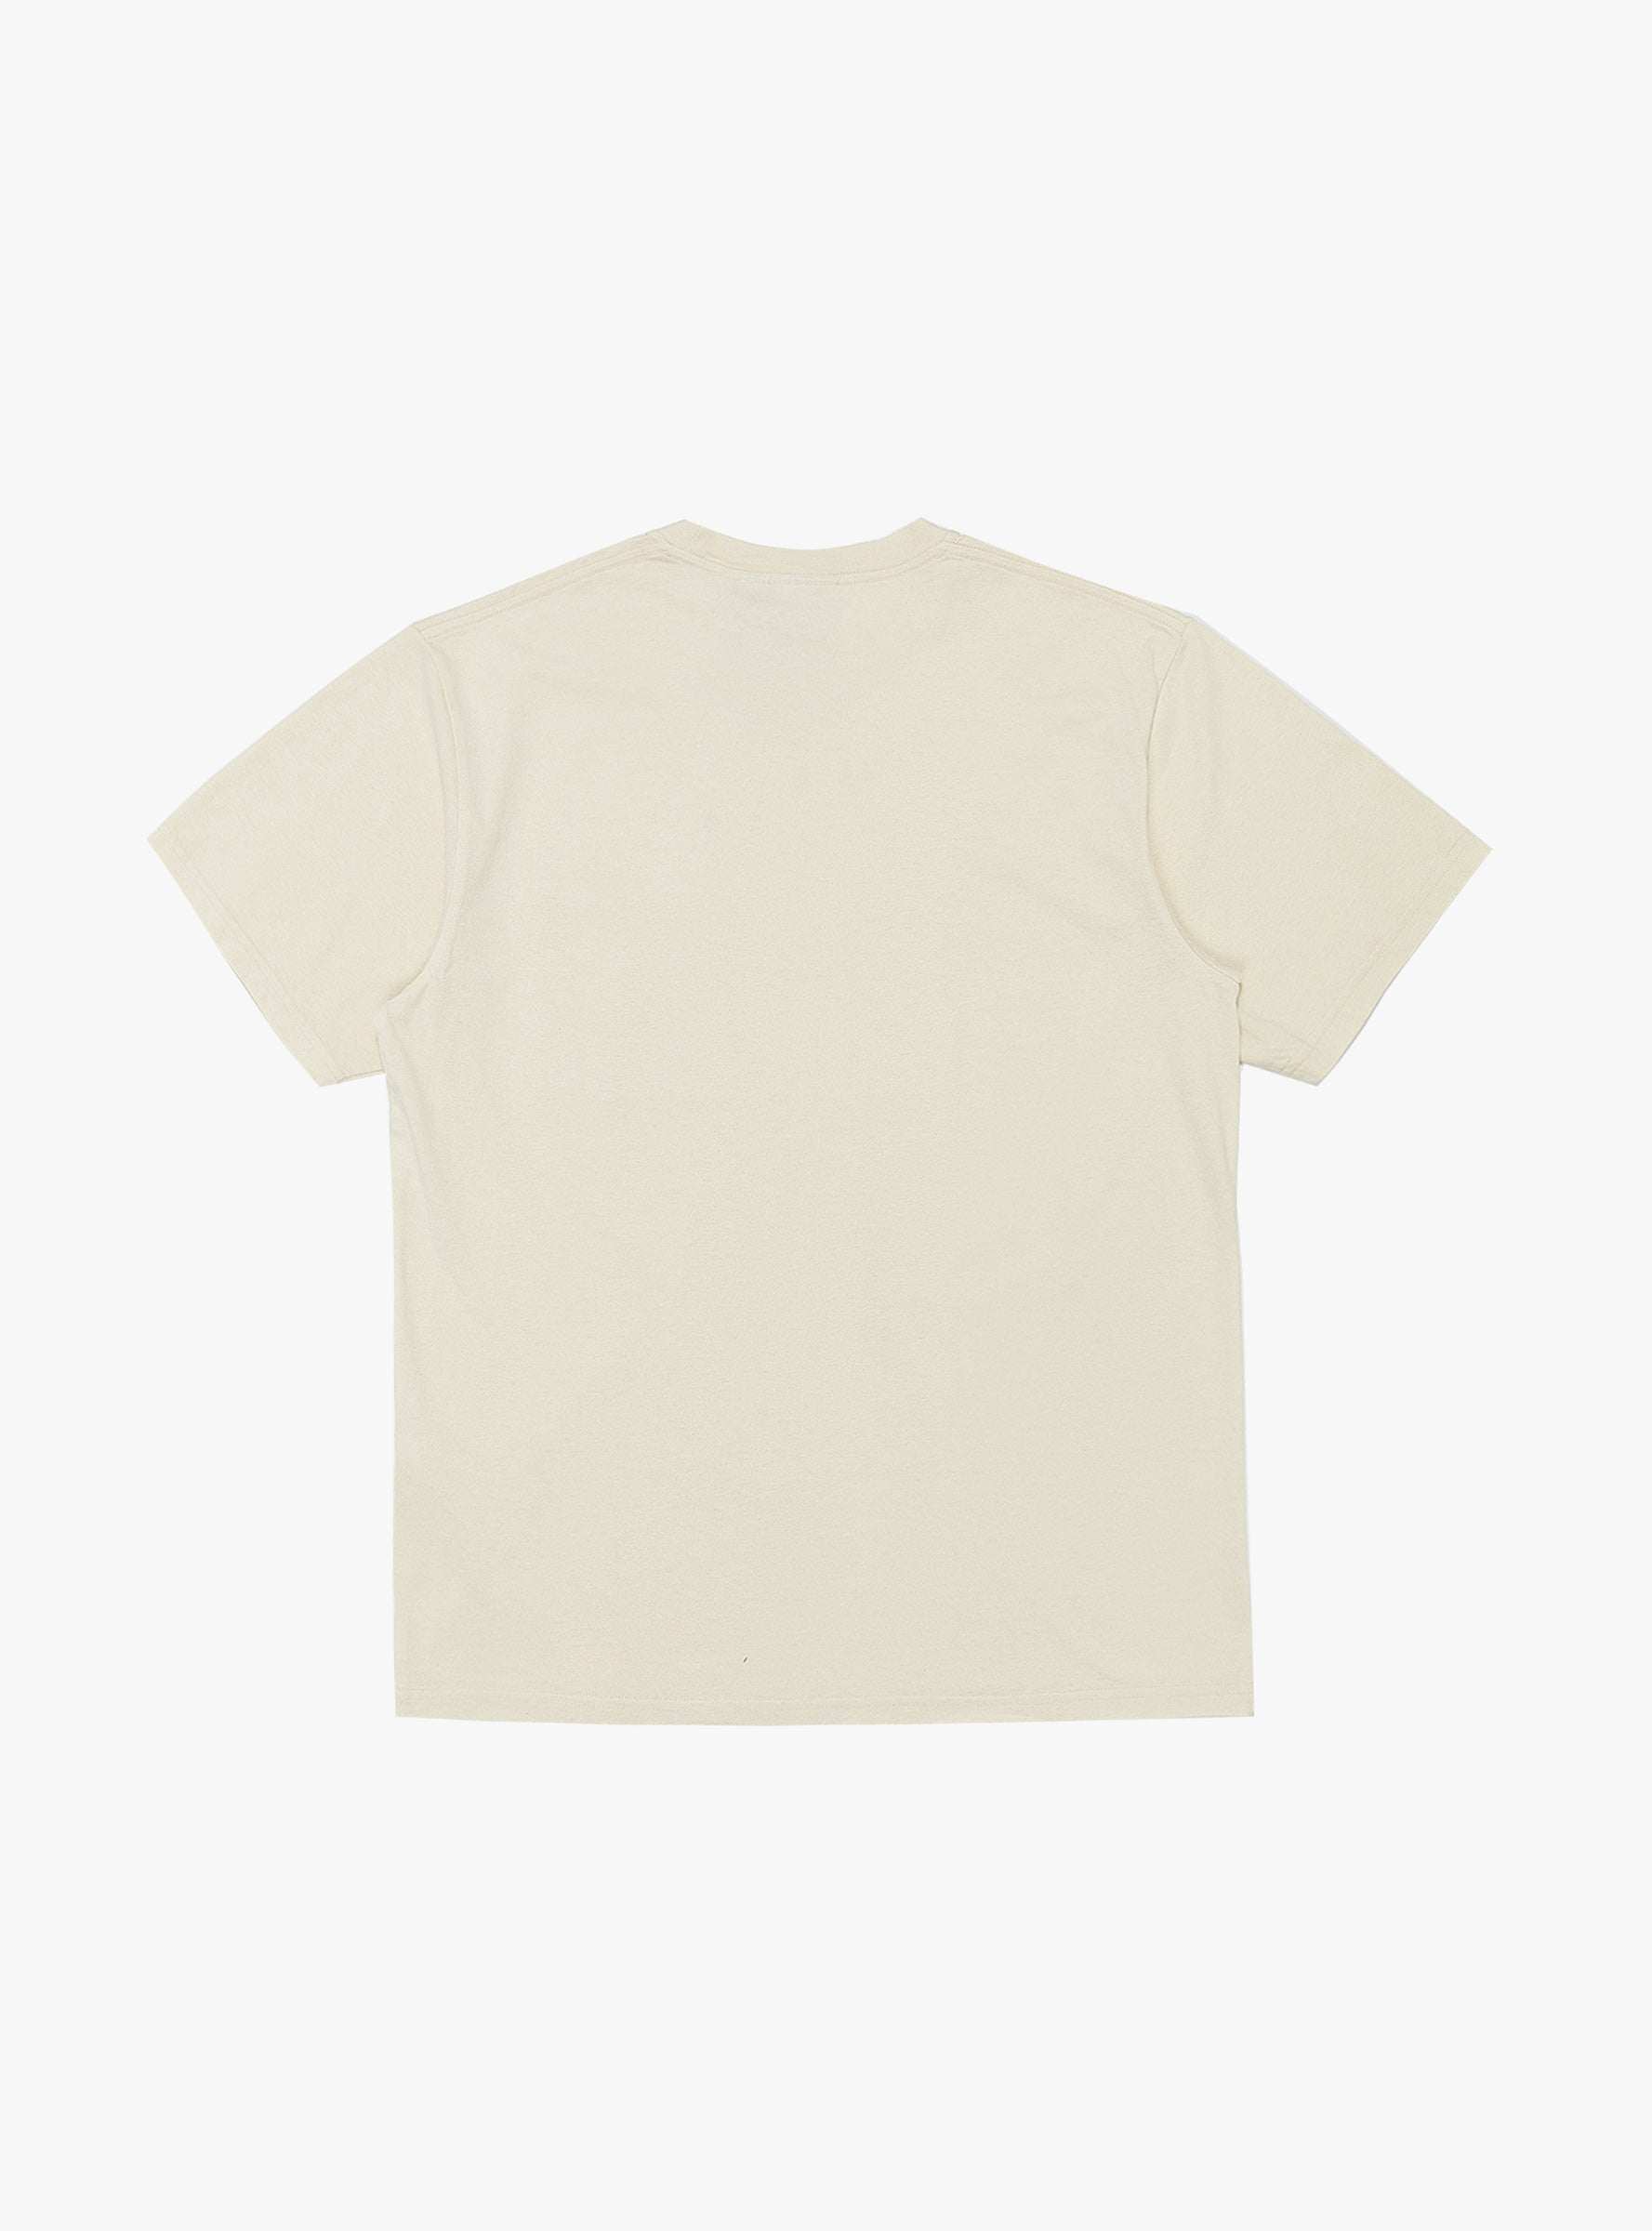 Gramicci Gramicci One Point T-shirt Sand Pigment - Size: Large